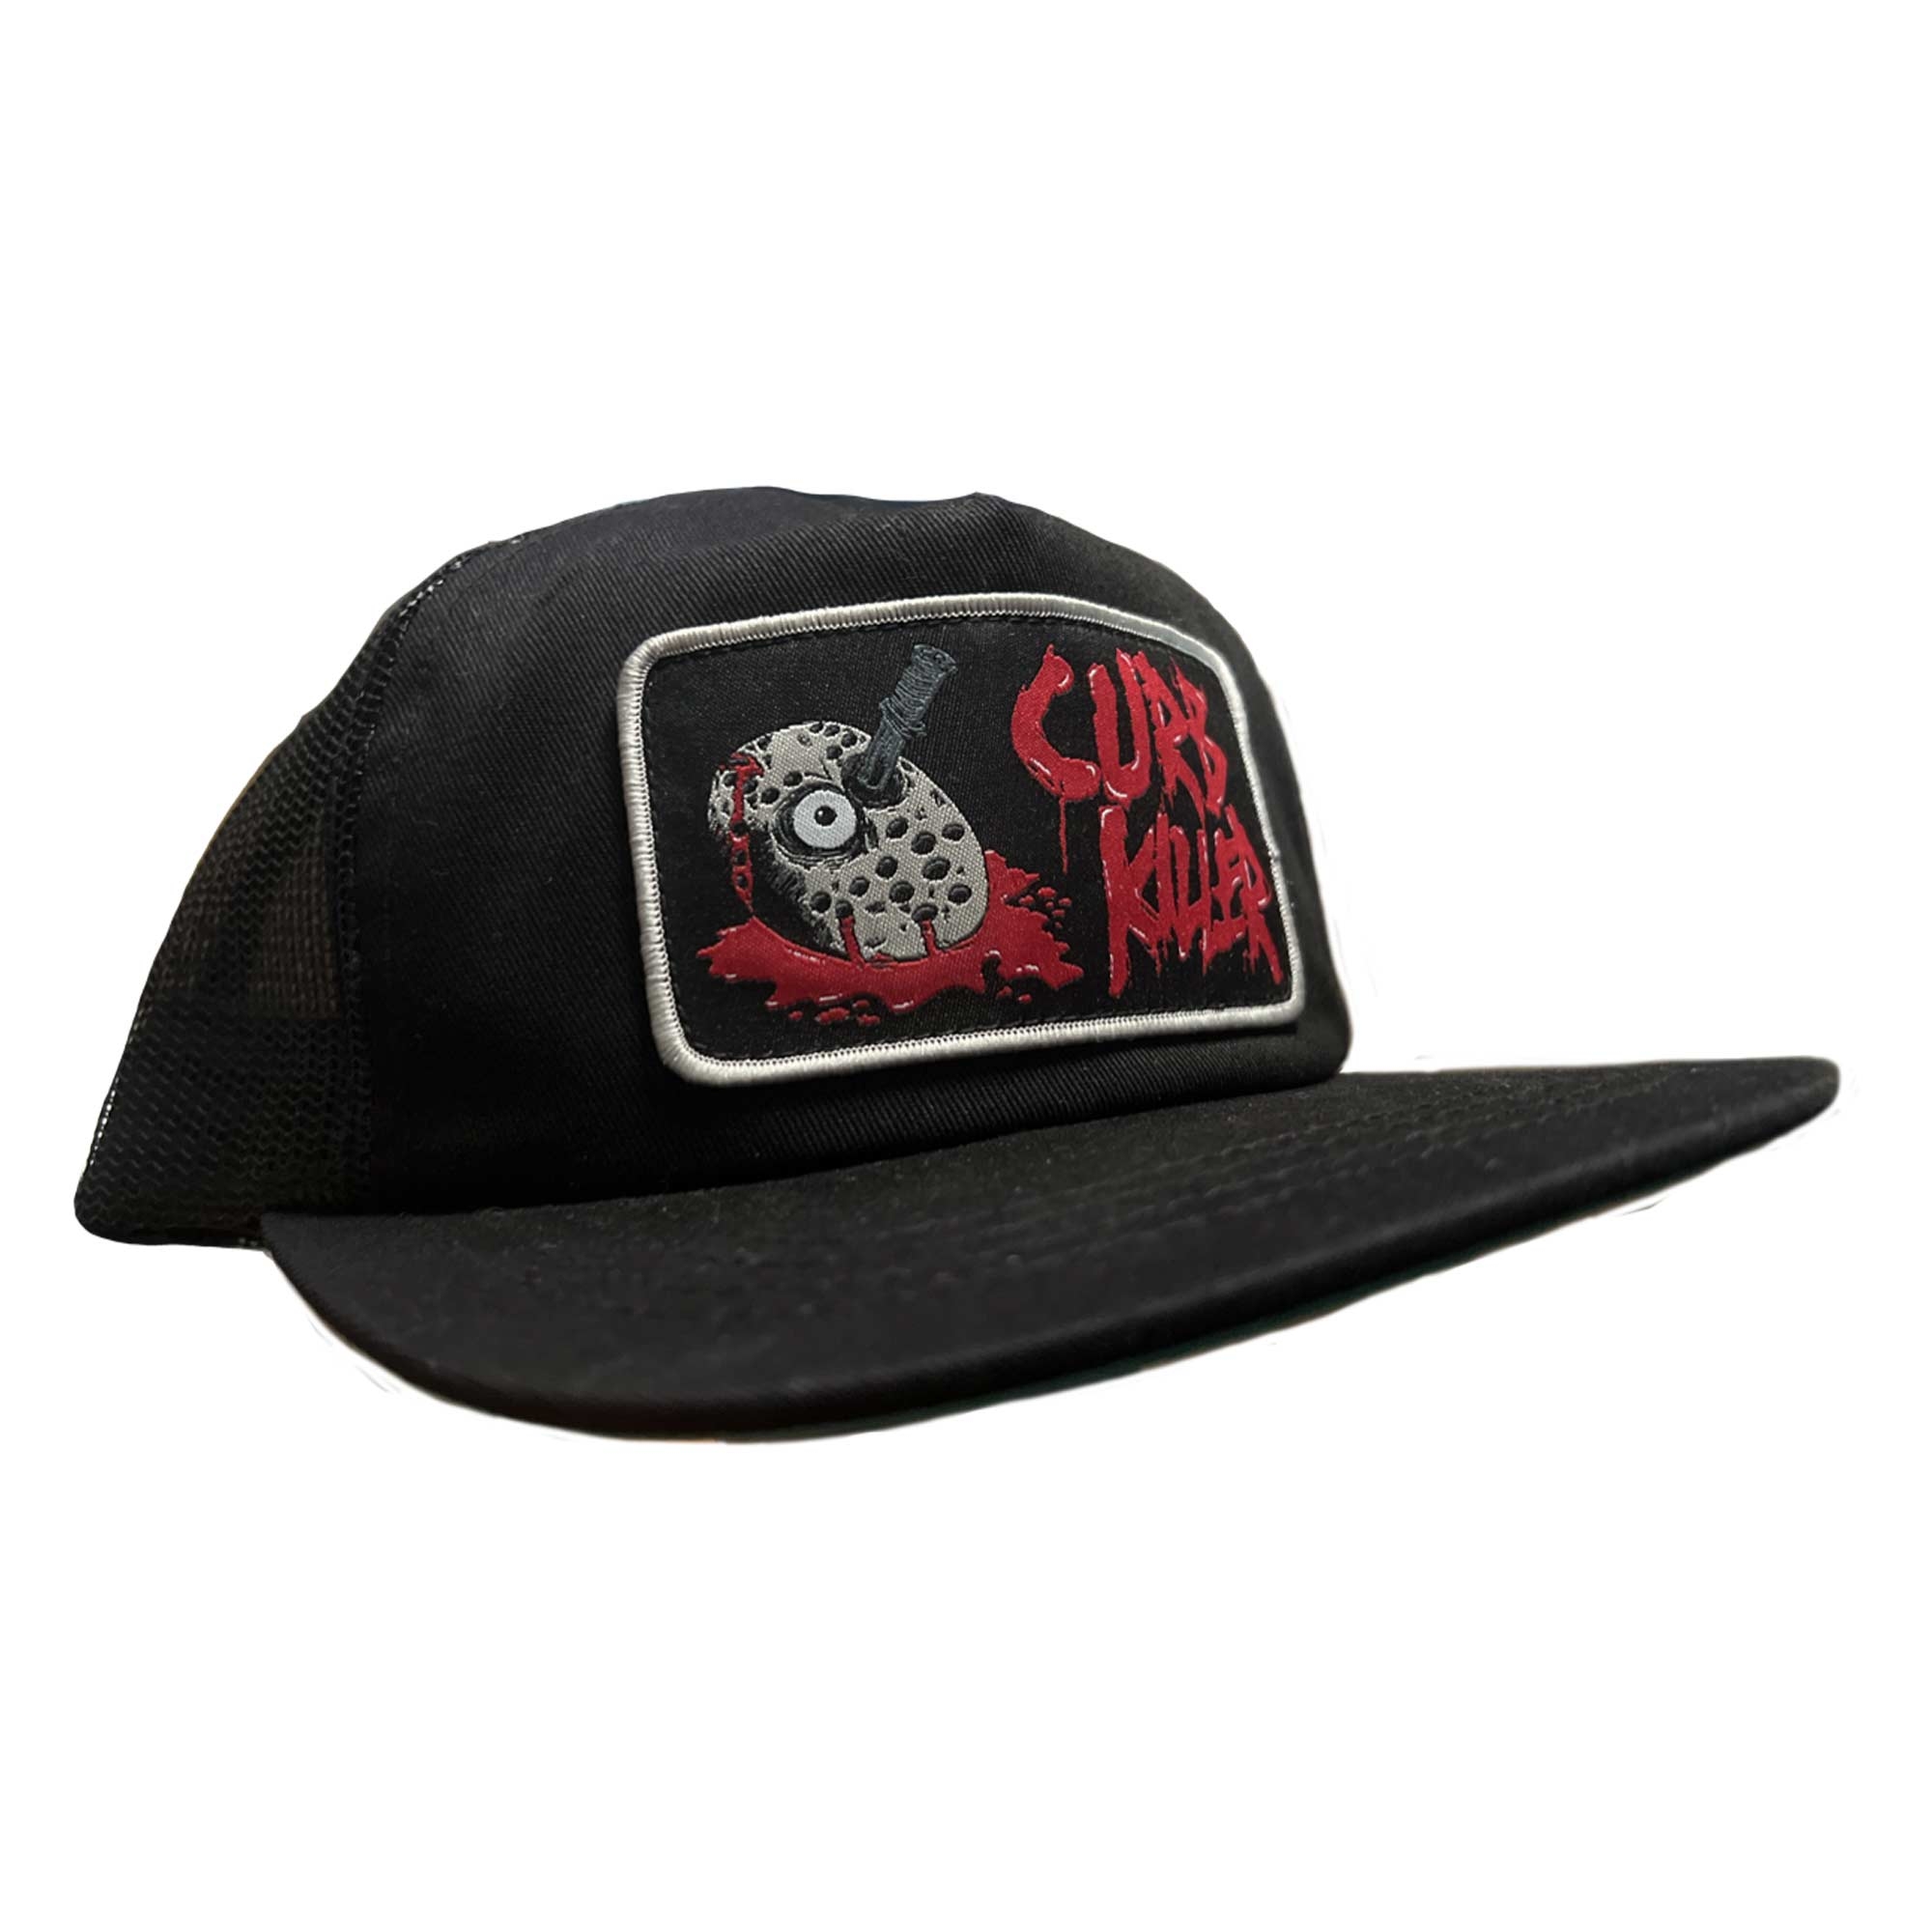 HEROIN Cap CURB KILLER Trucker Hat, black